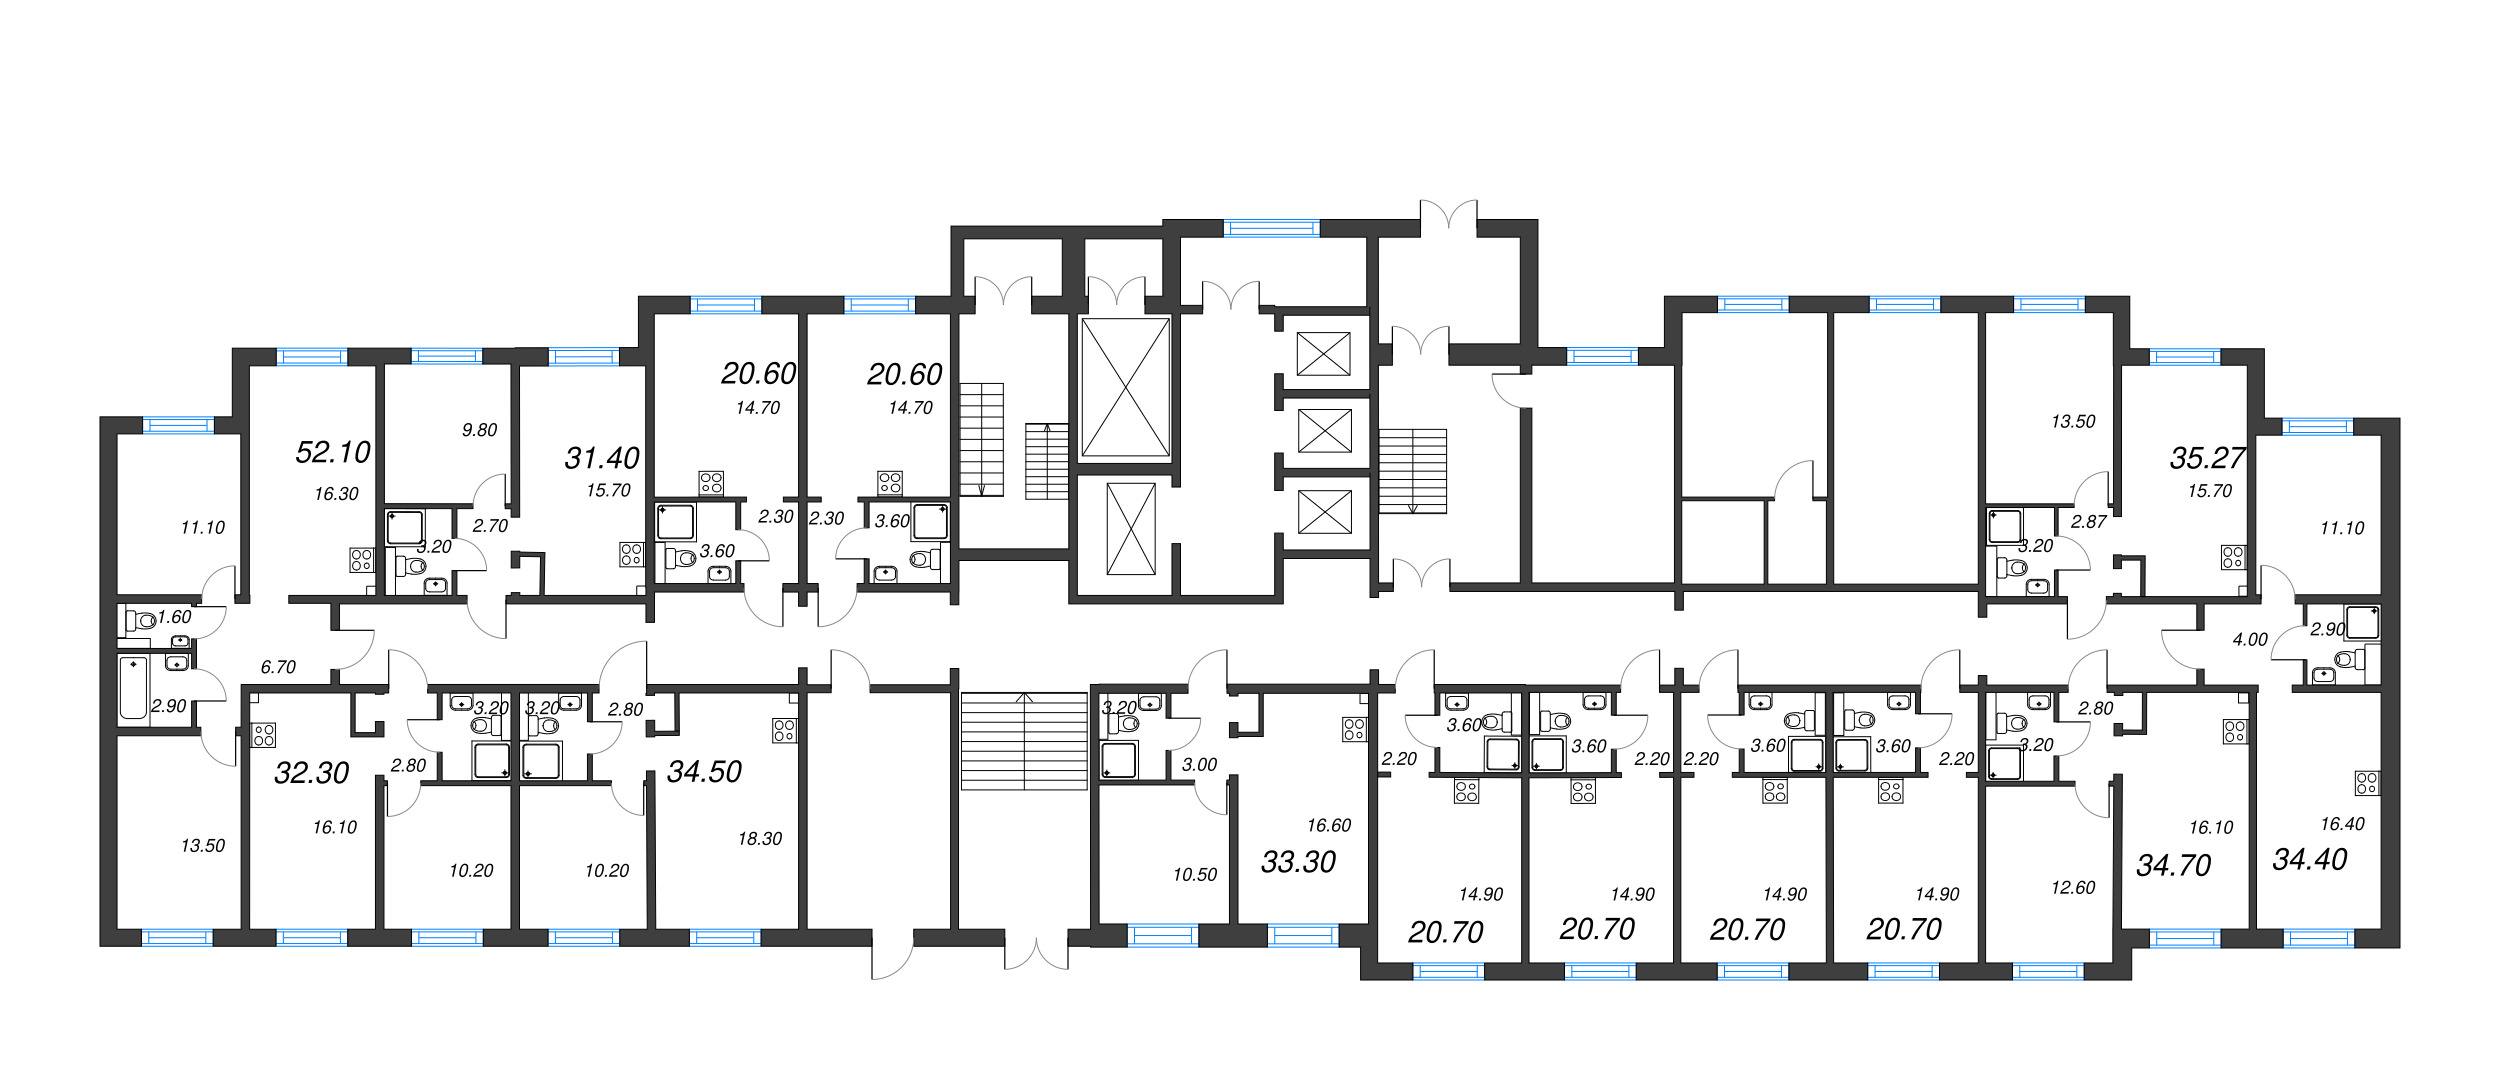 2-комнатная (Евро) квартира, 33.3 м² - планировка этажа